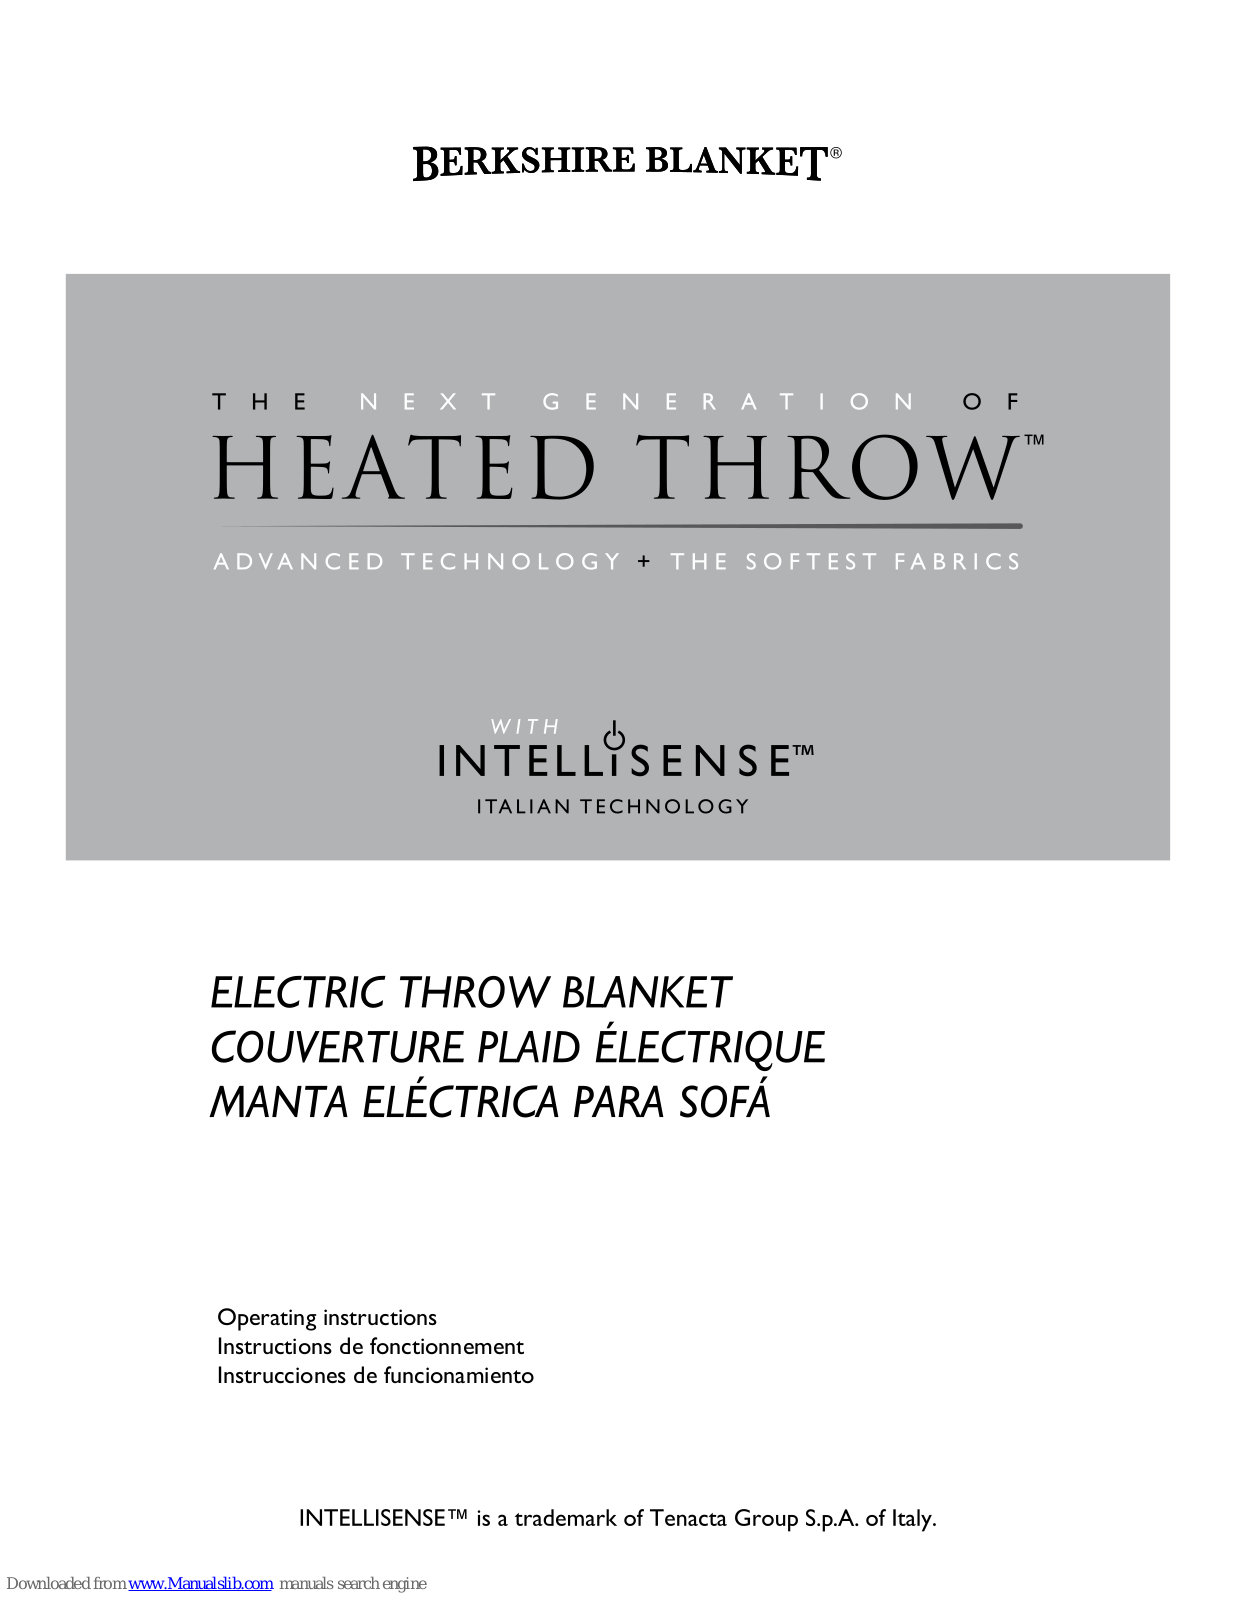 Berkshire Blanket heated throw Operating Instructions Manual